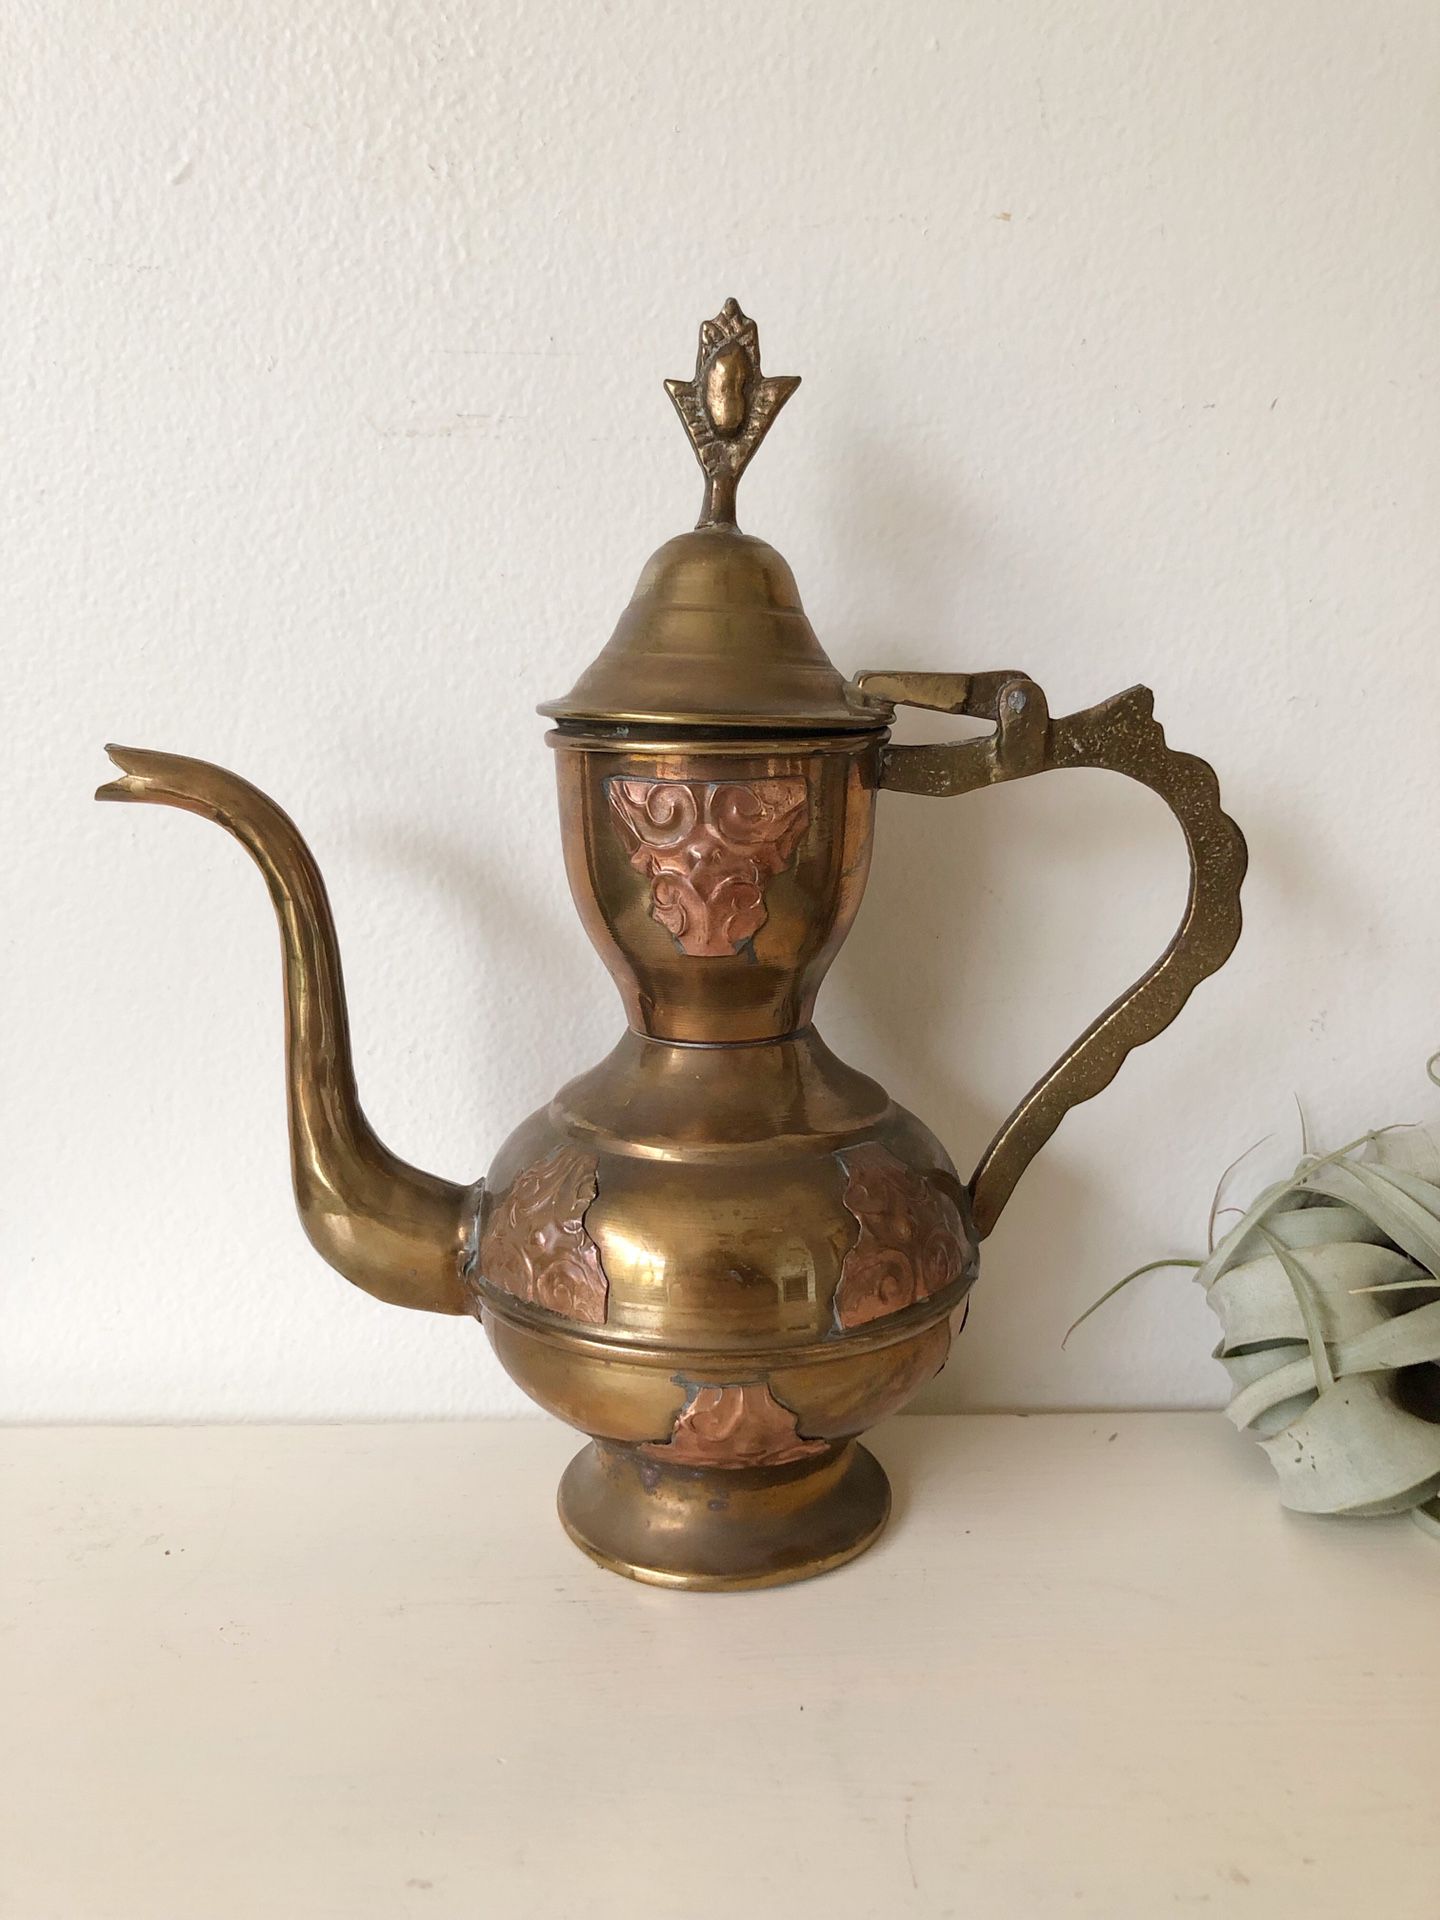 Vintage brass and copper tea pot / decorative use